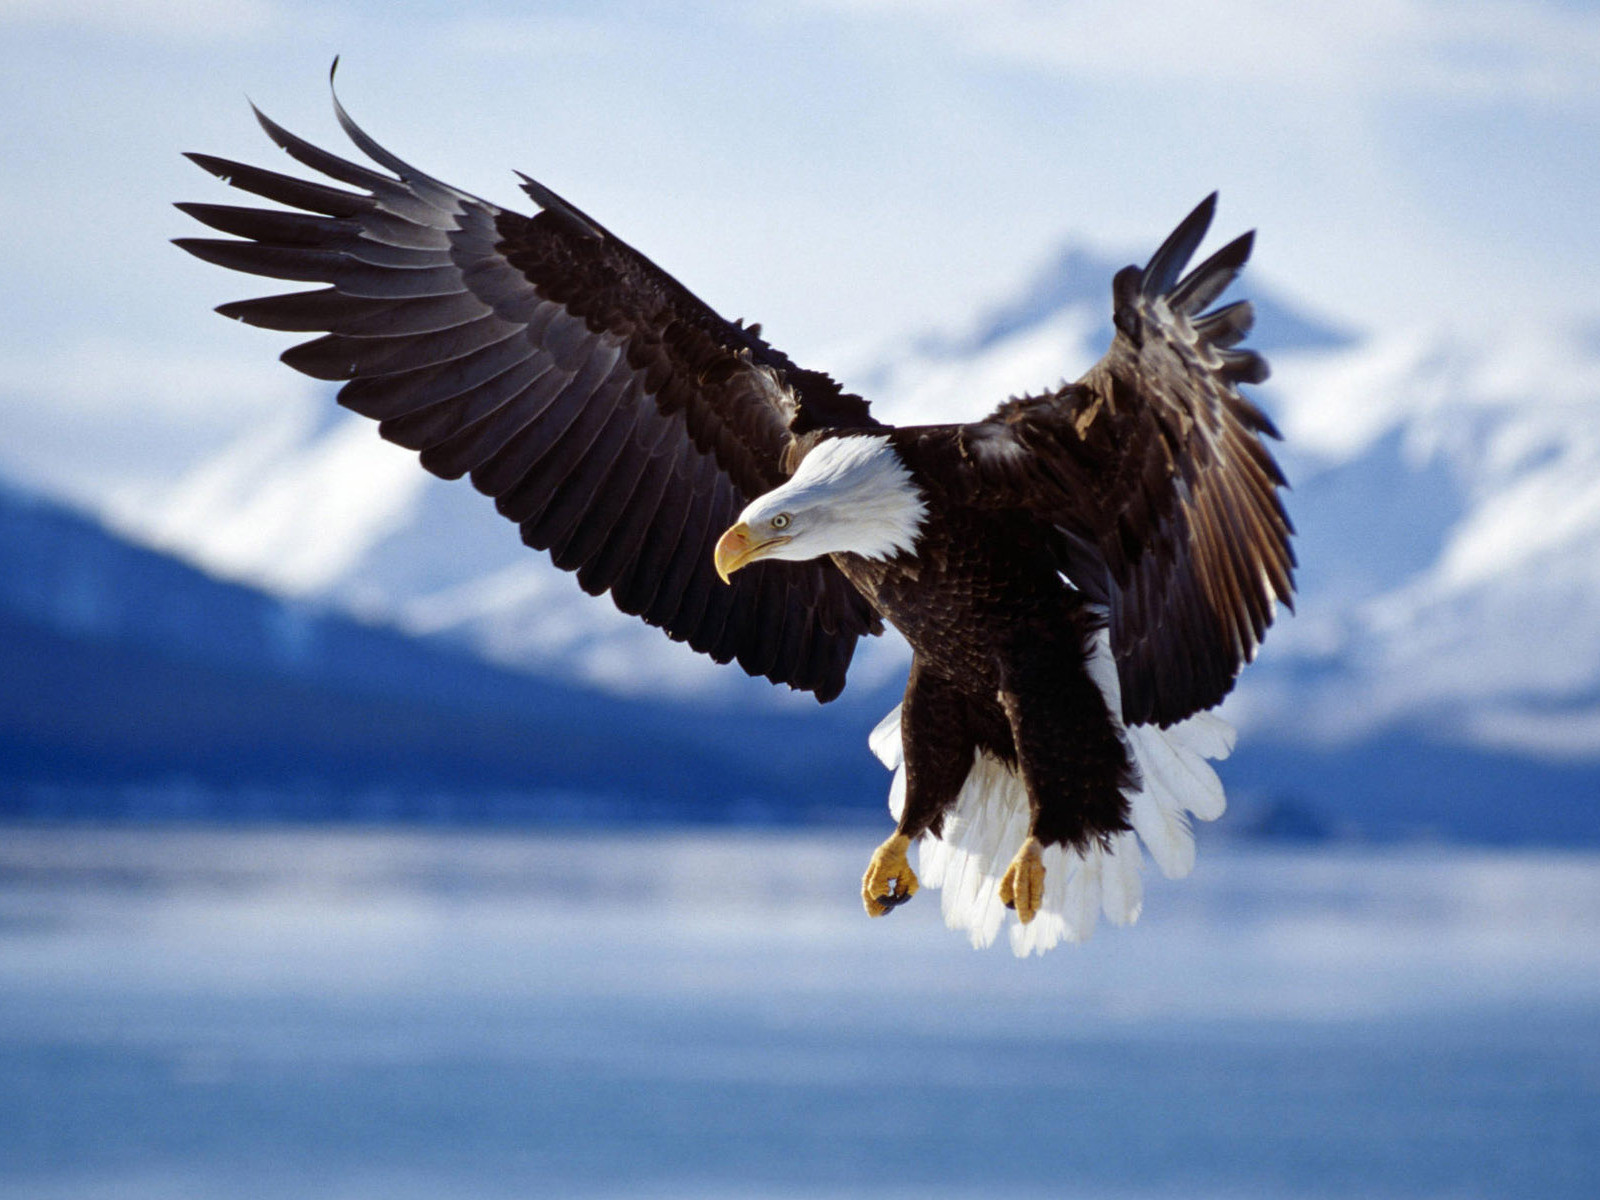 Mobile Desktop Background Hd Picture Of Eagle Flying